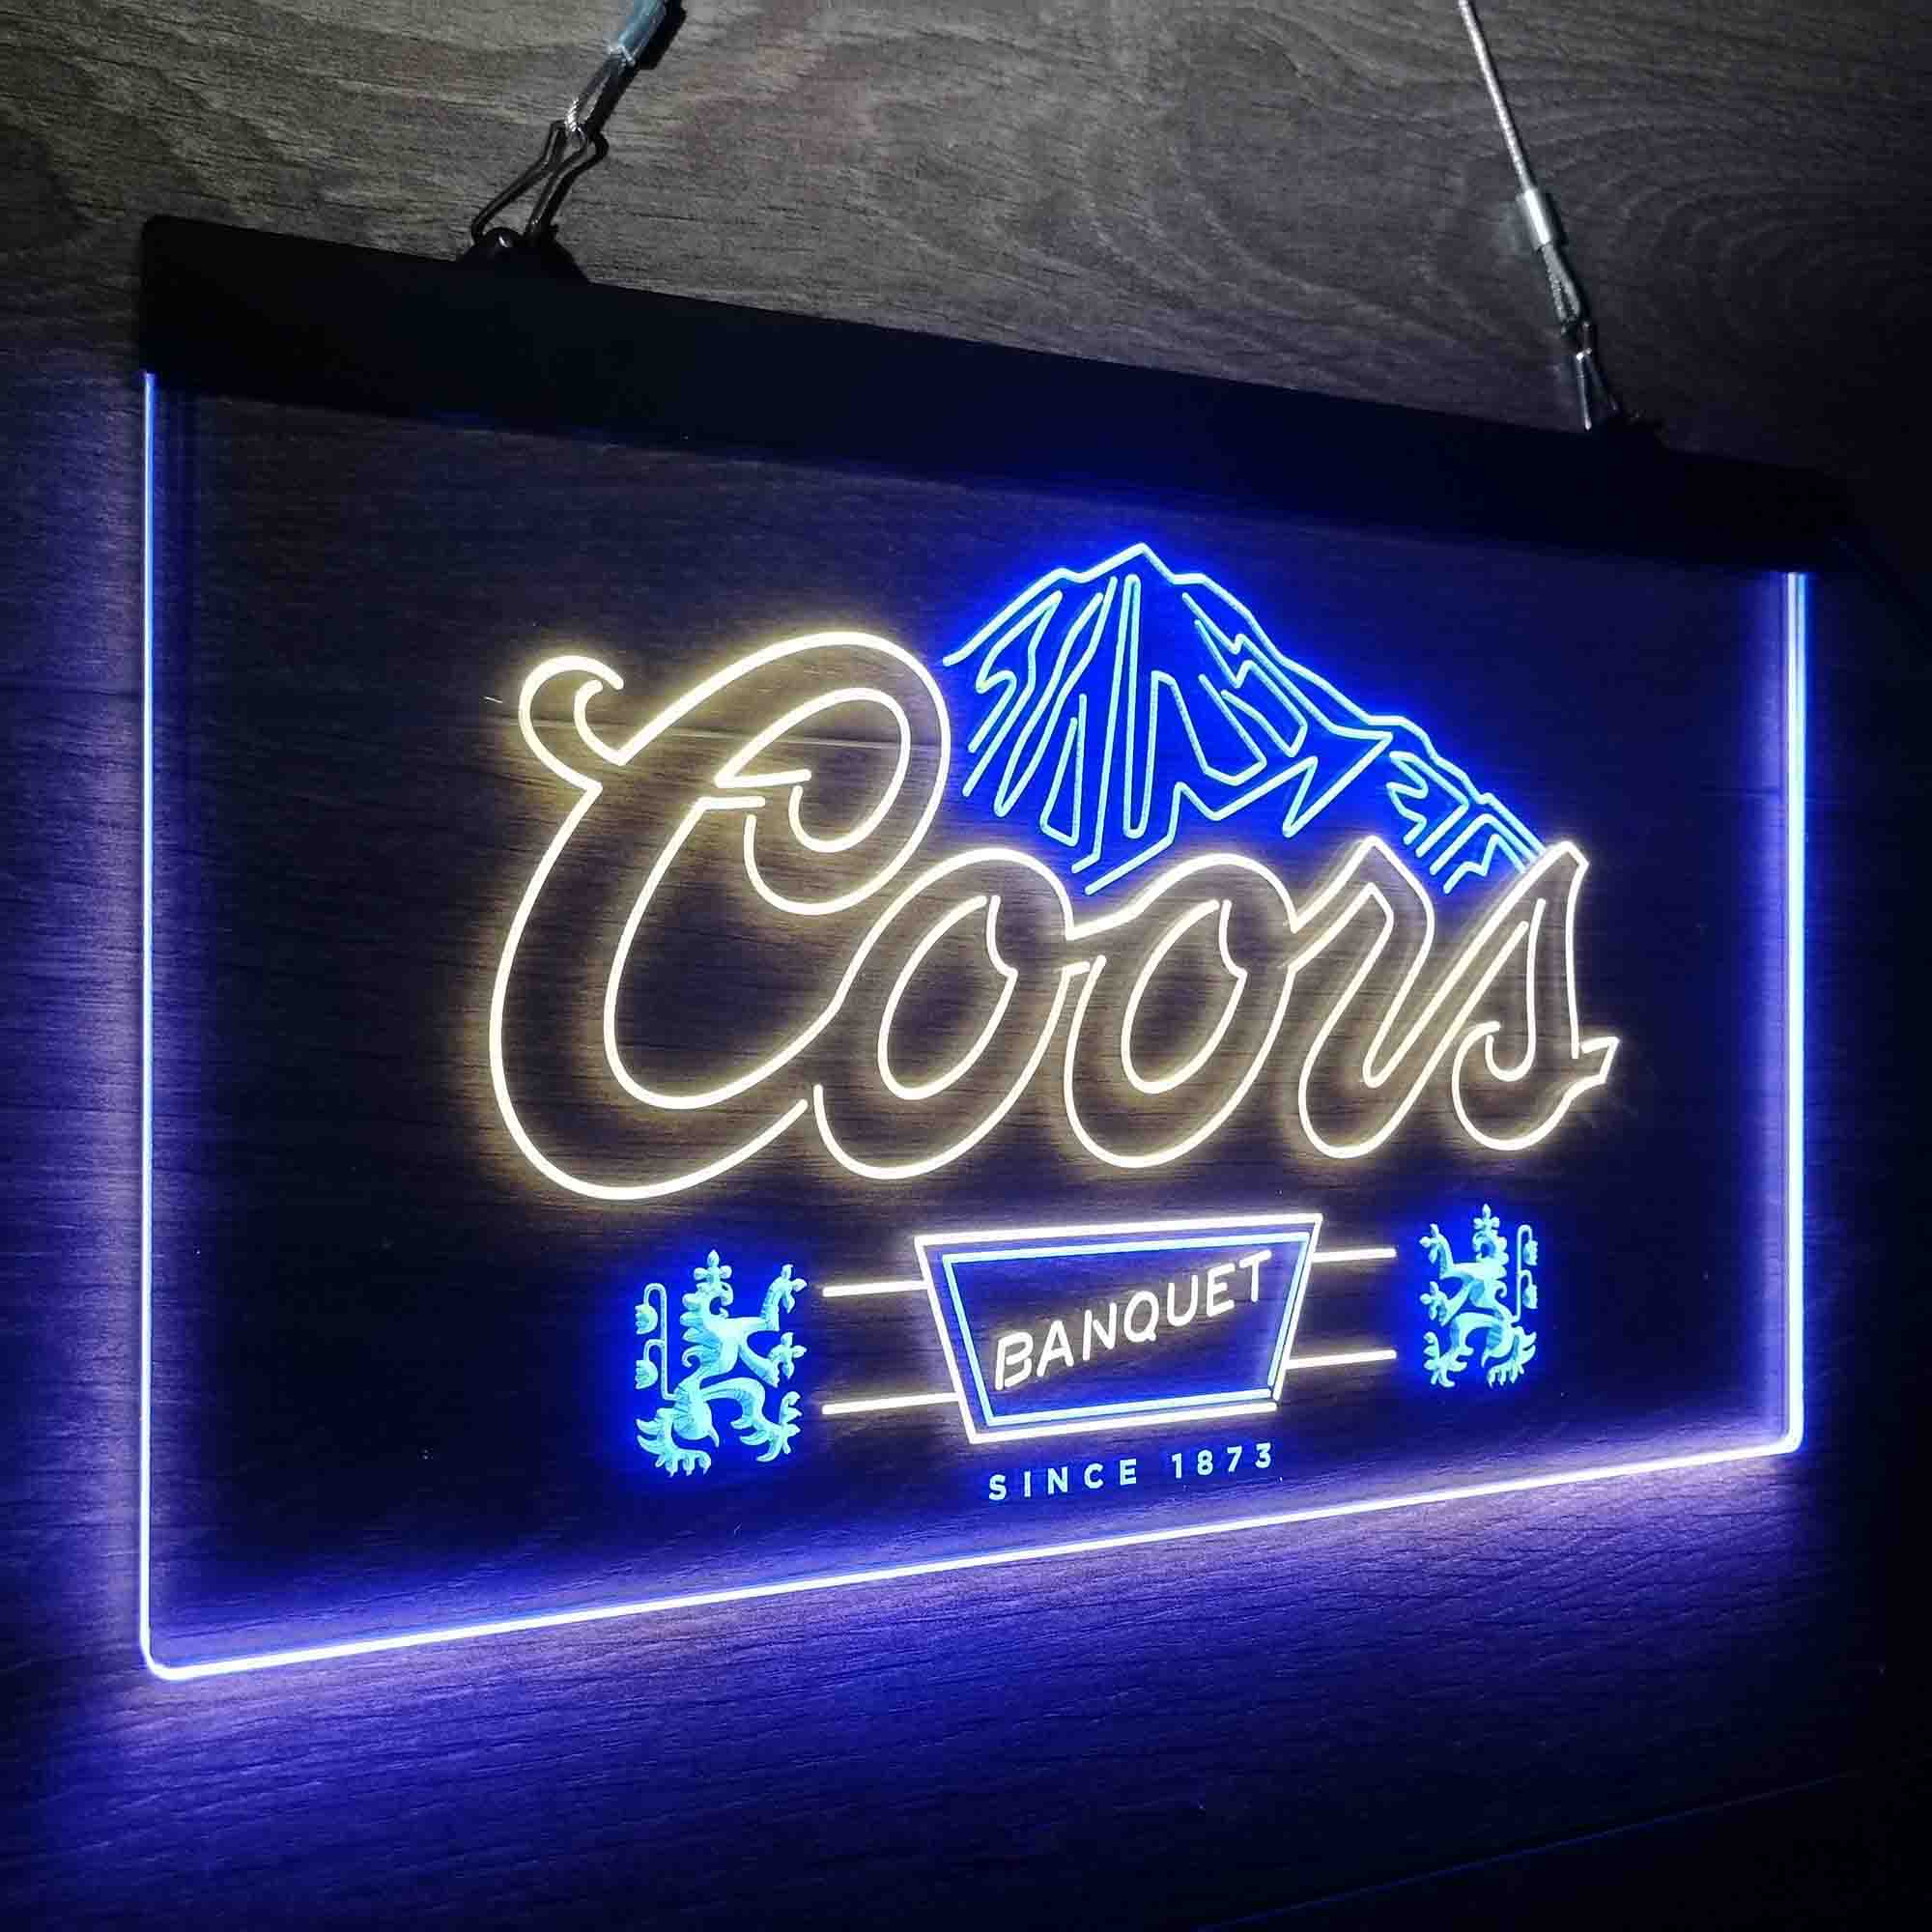 Coorss Banquet LED Neon Sign